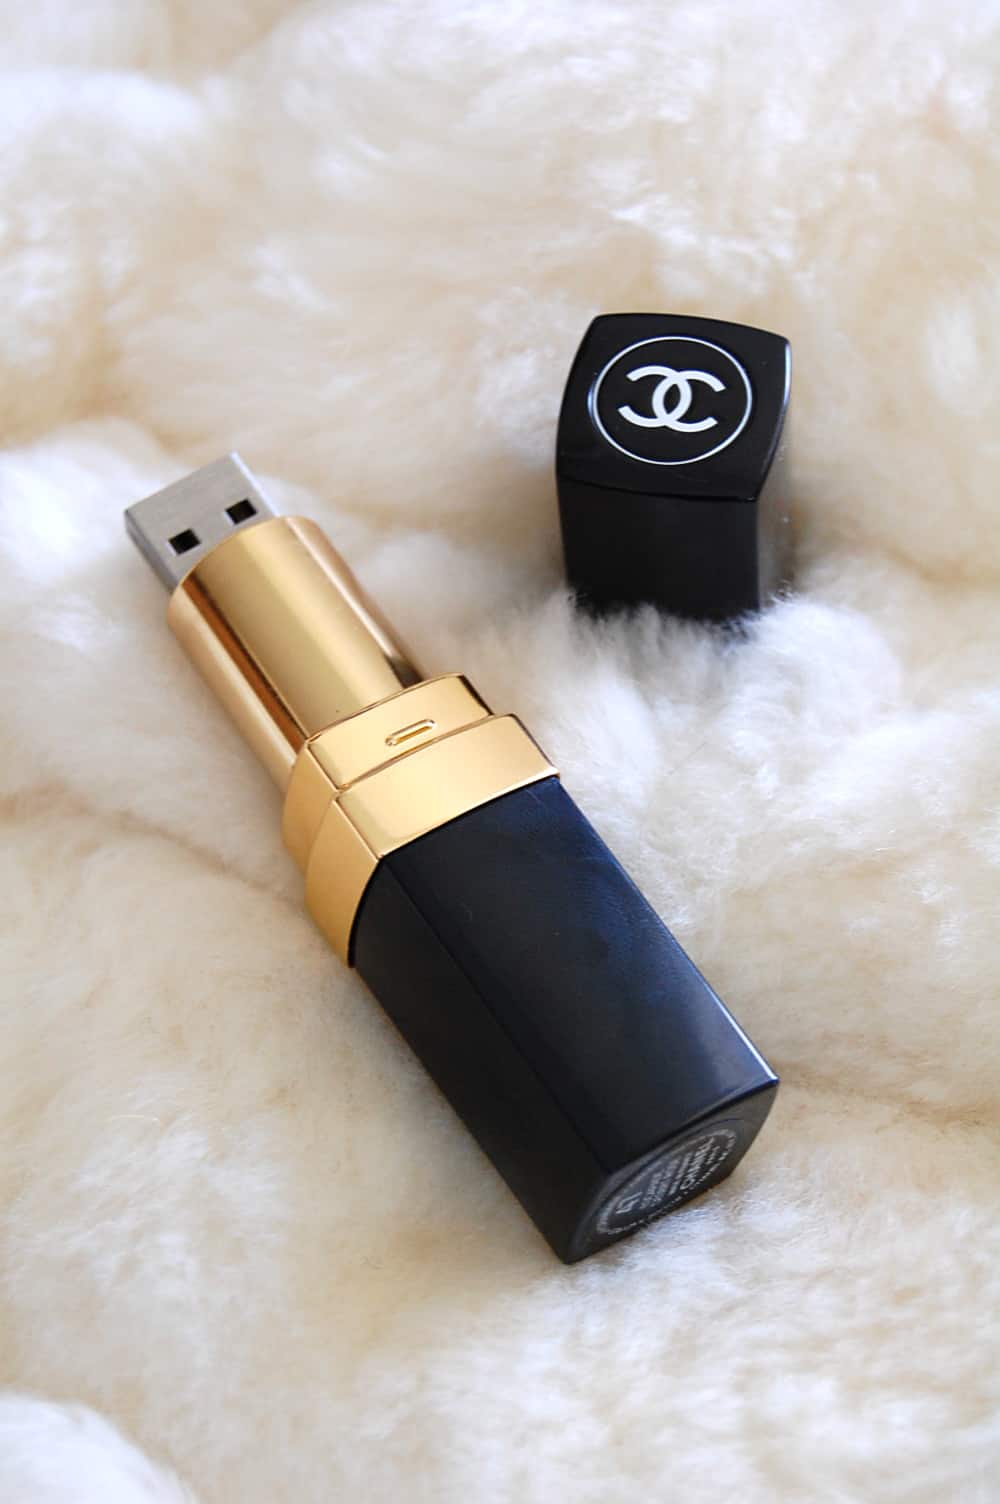 Chanel lipstick usb flash drive